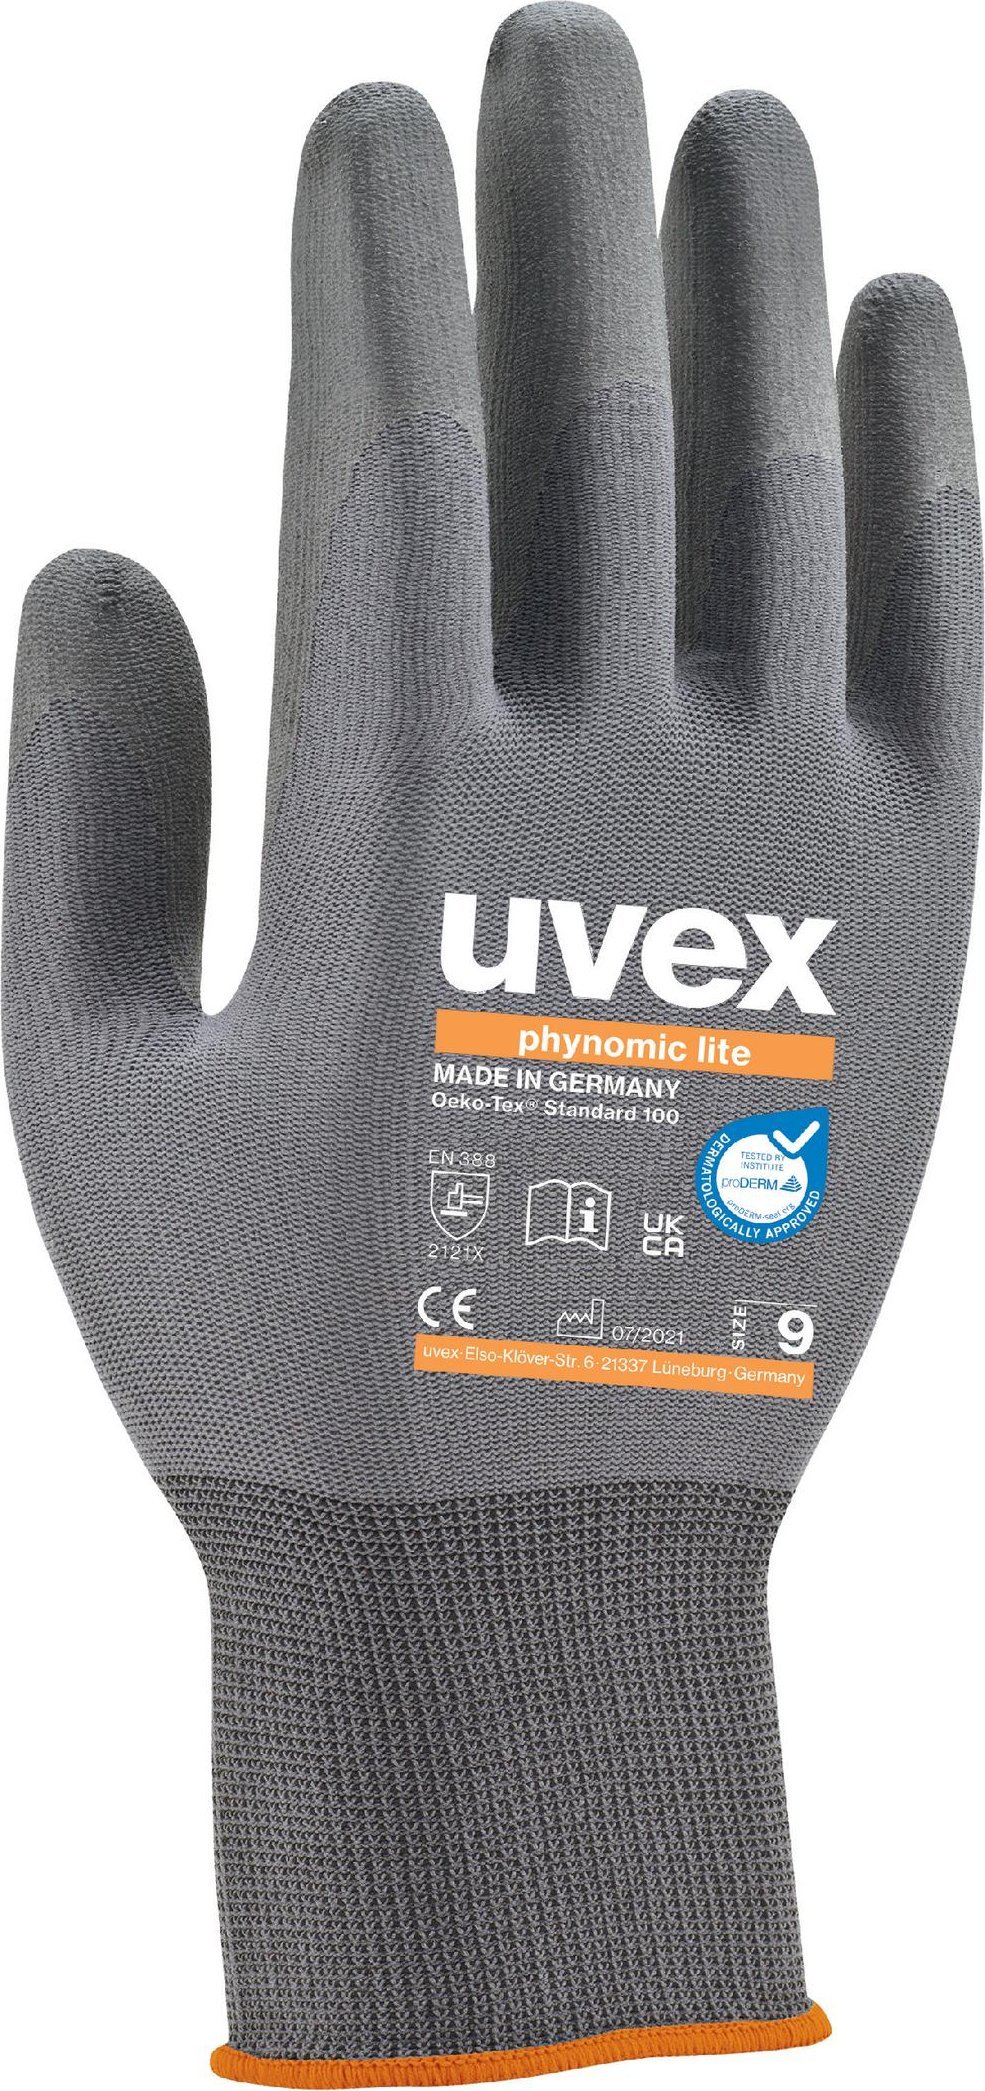 Фото - Засоби захисту UVEX phynomic lite safety glove size 7 